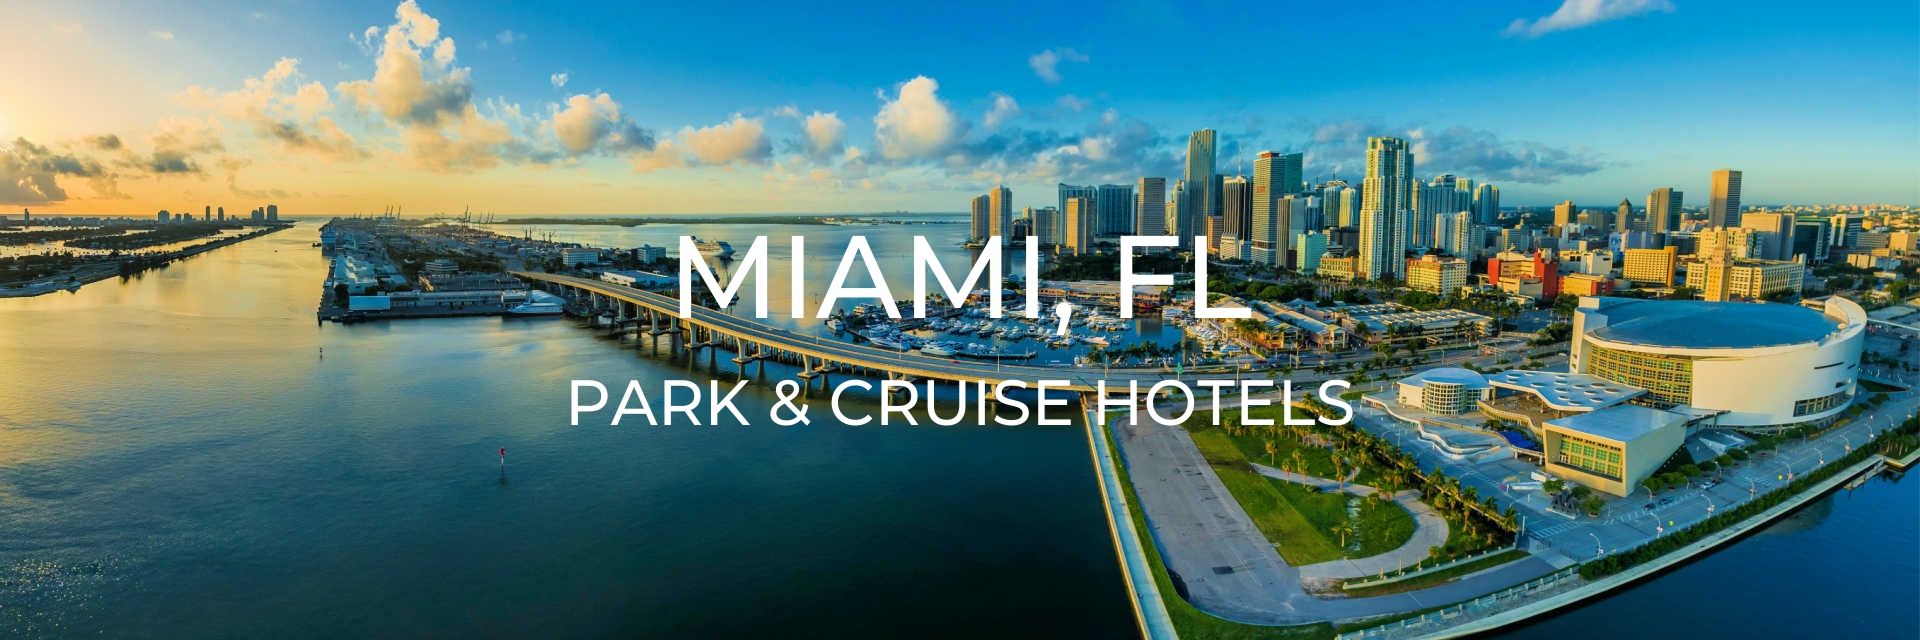 Miami Hotels Hotels Deals Compare